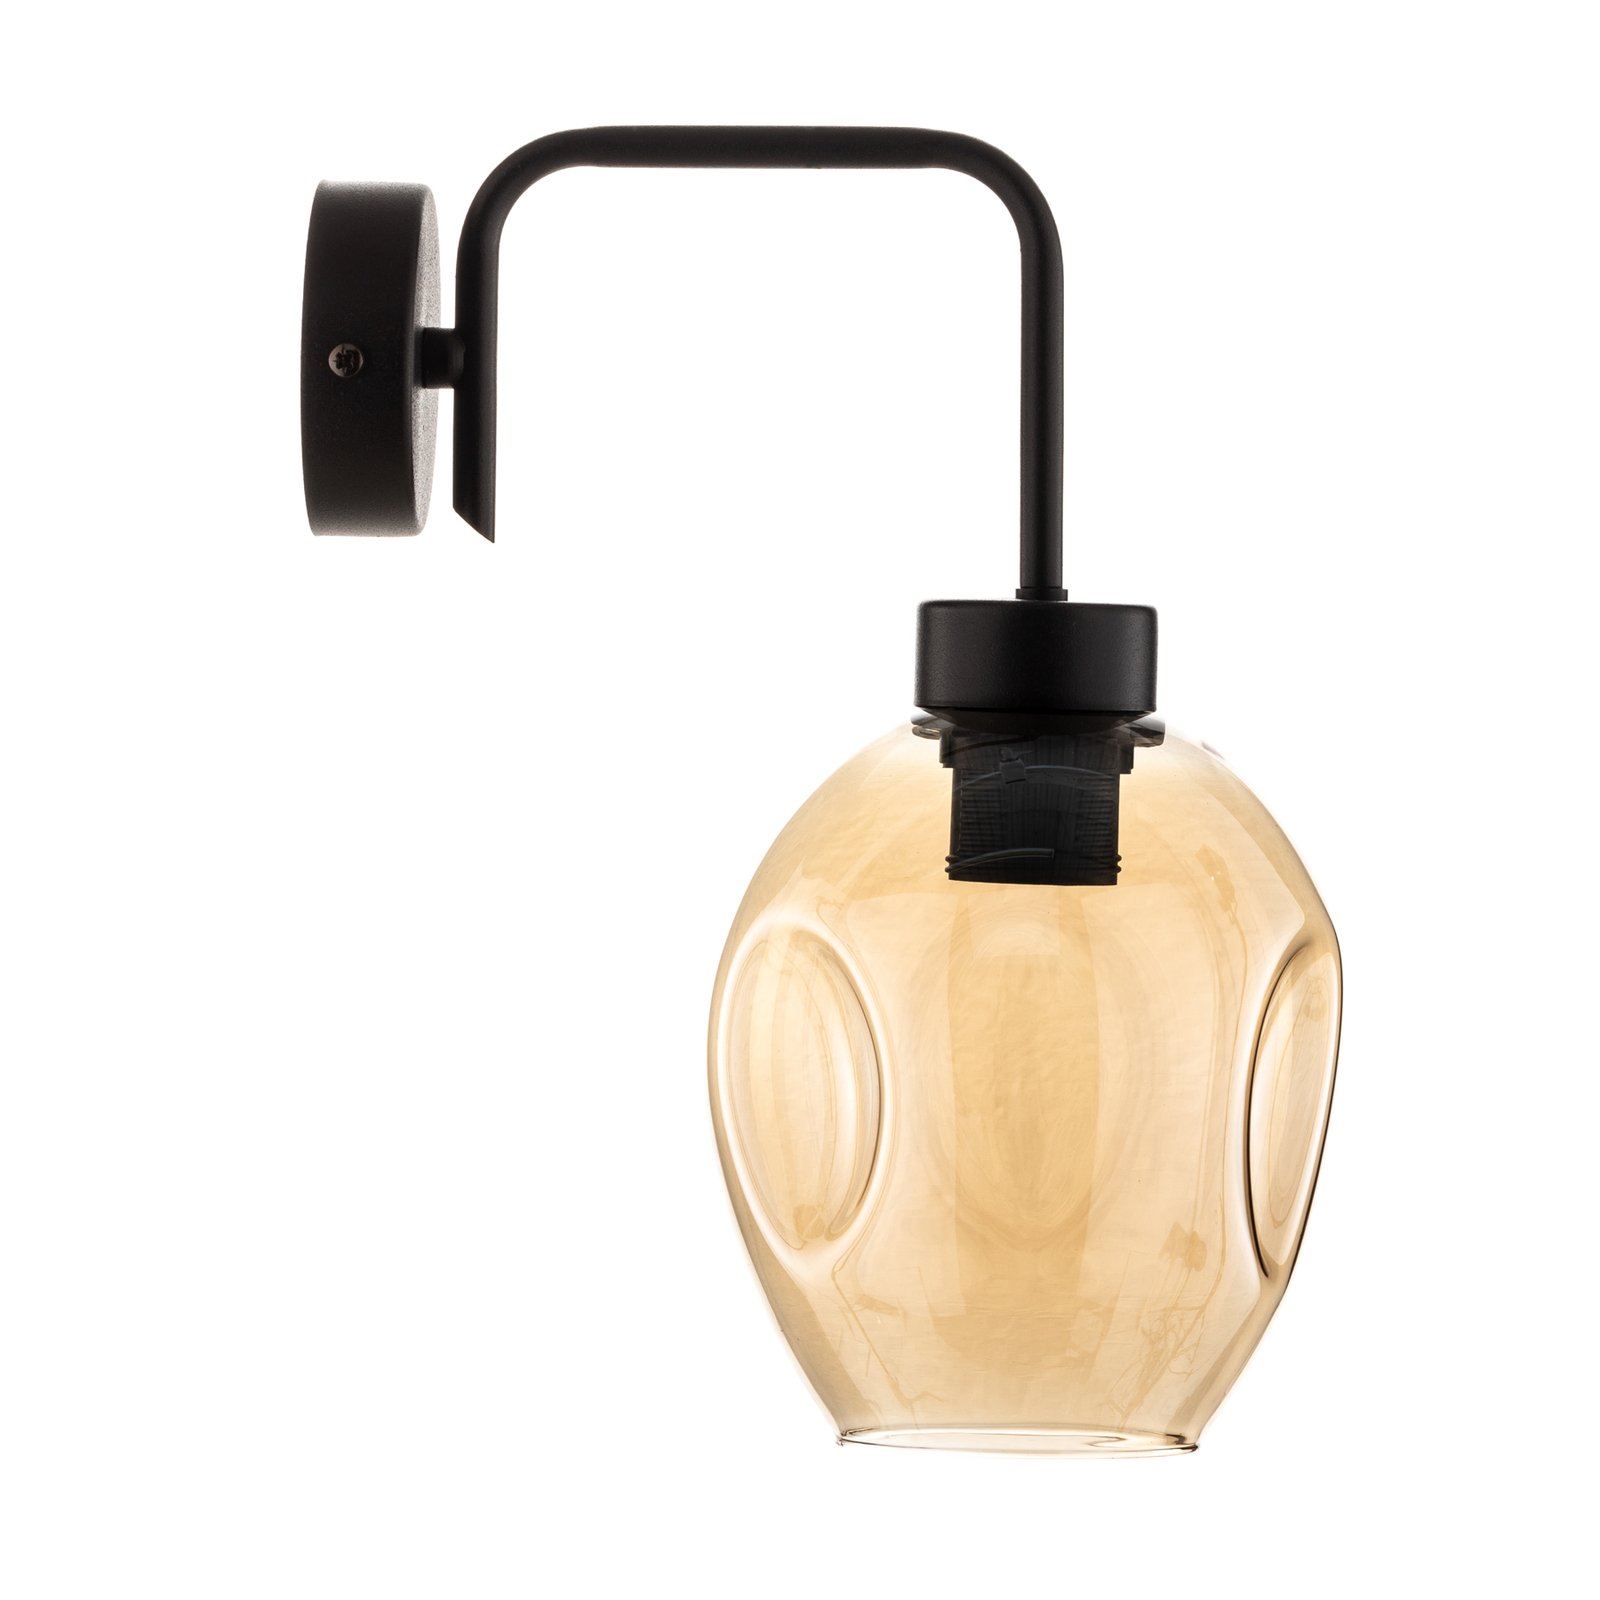 Lukka wall light, one-bulb, black/amber